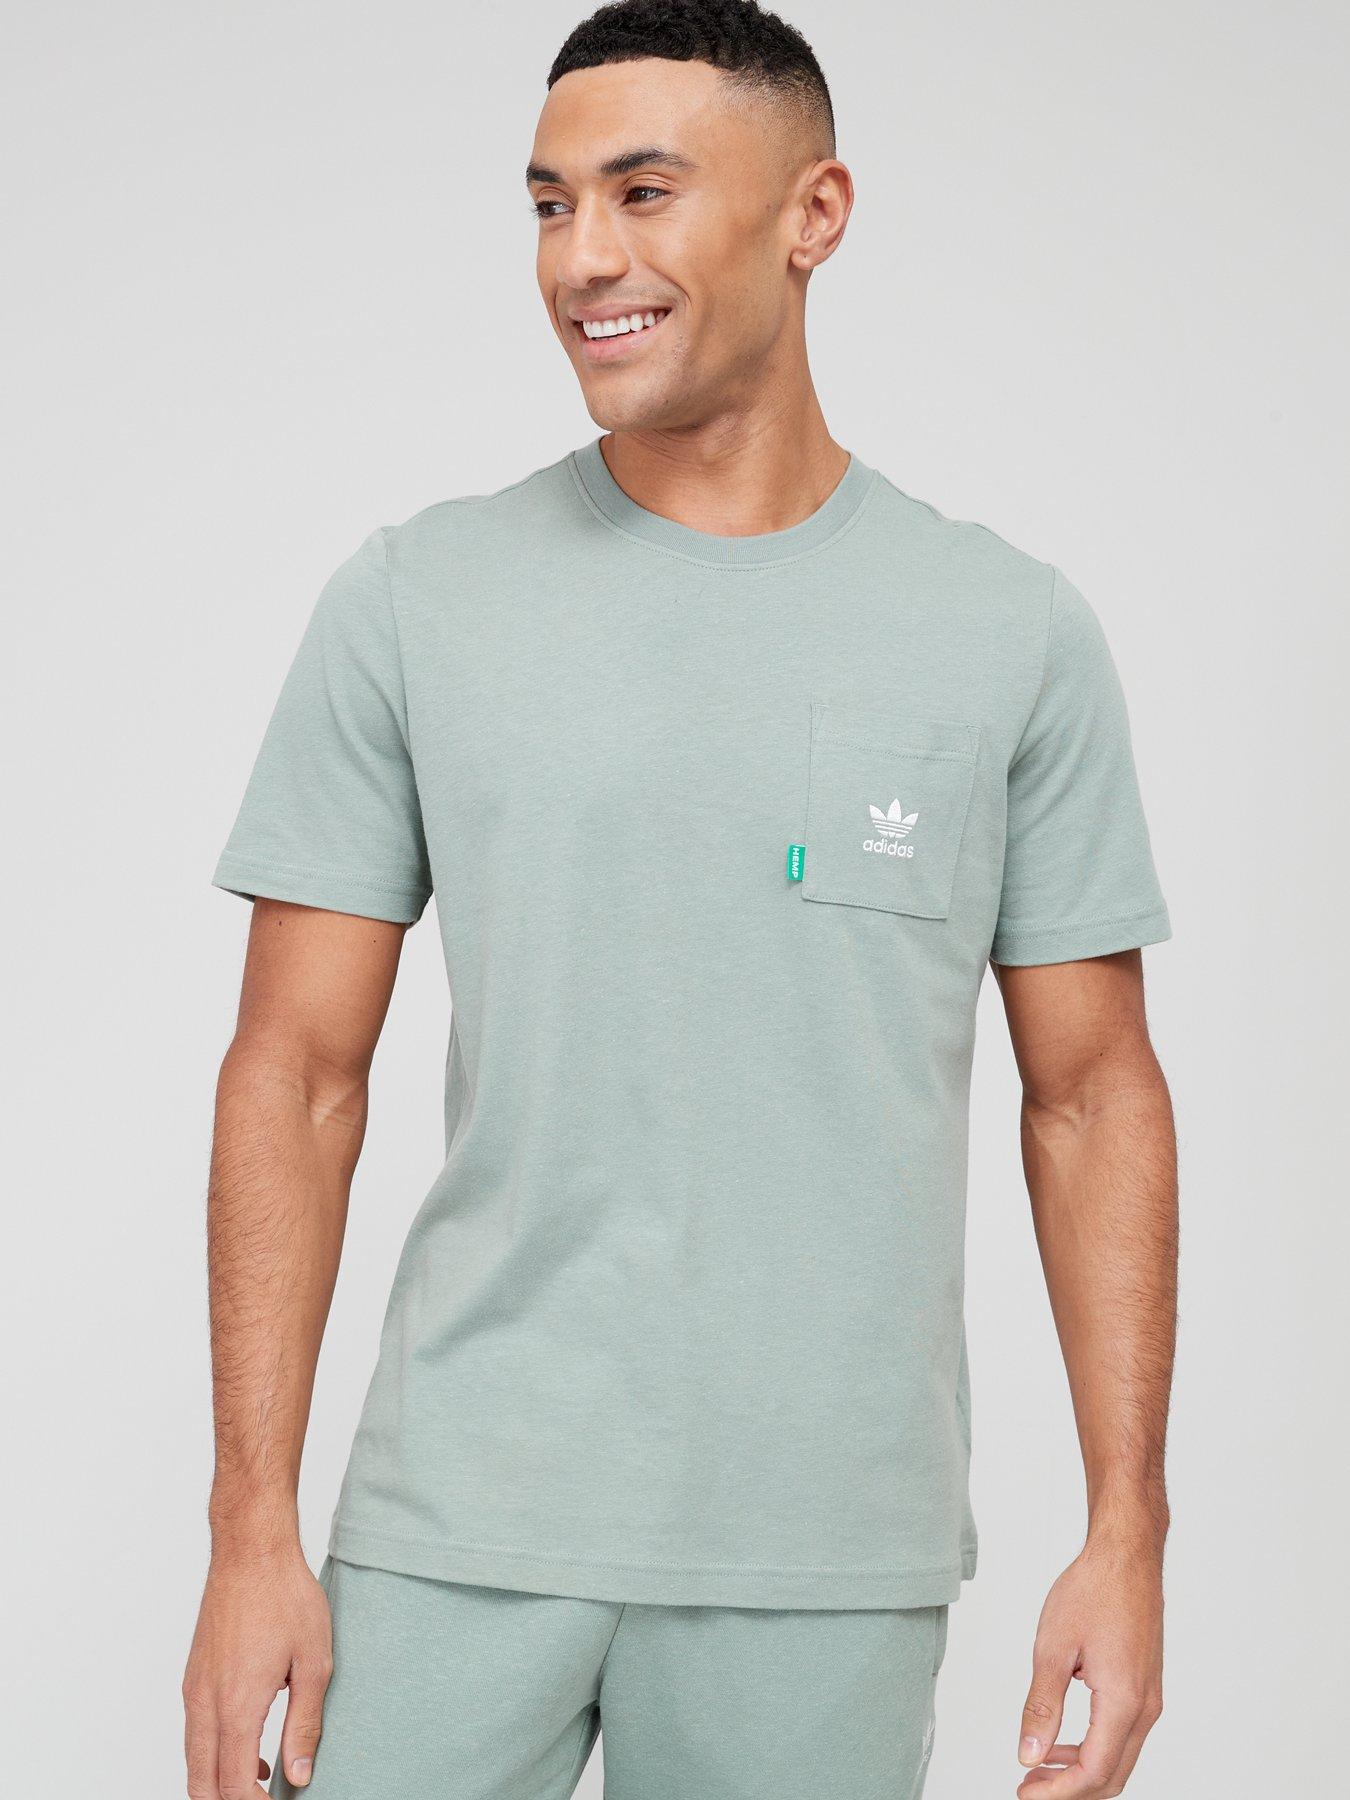 Hemp Essentials+ Originals With T-Shirt adidas Green - Made